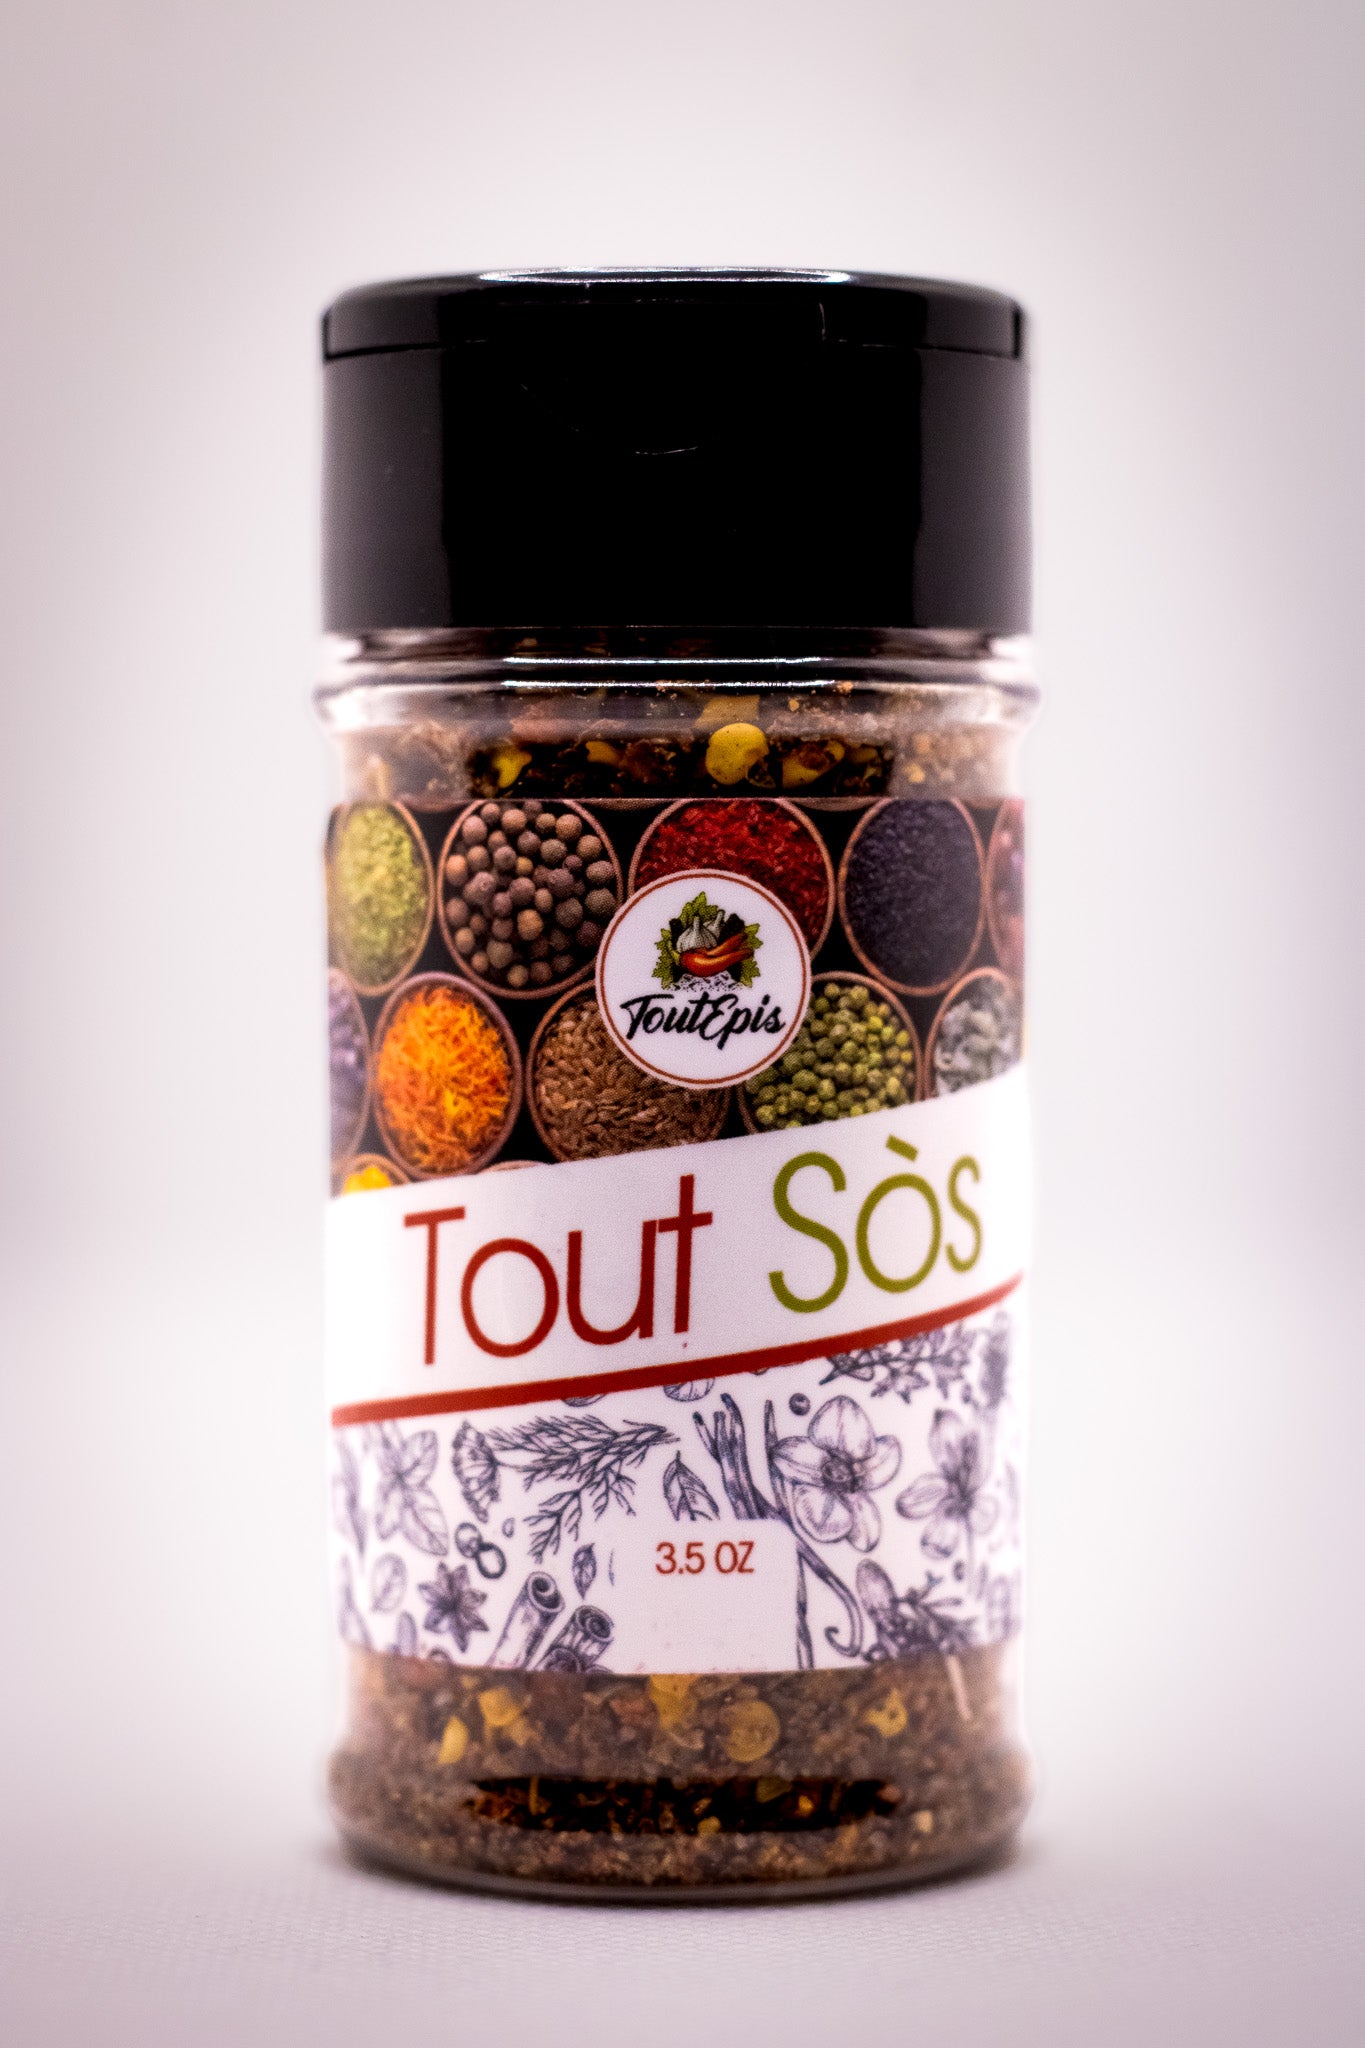 3.5 oz seasoning bottle with Tout Sòs label